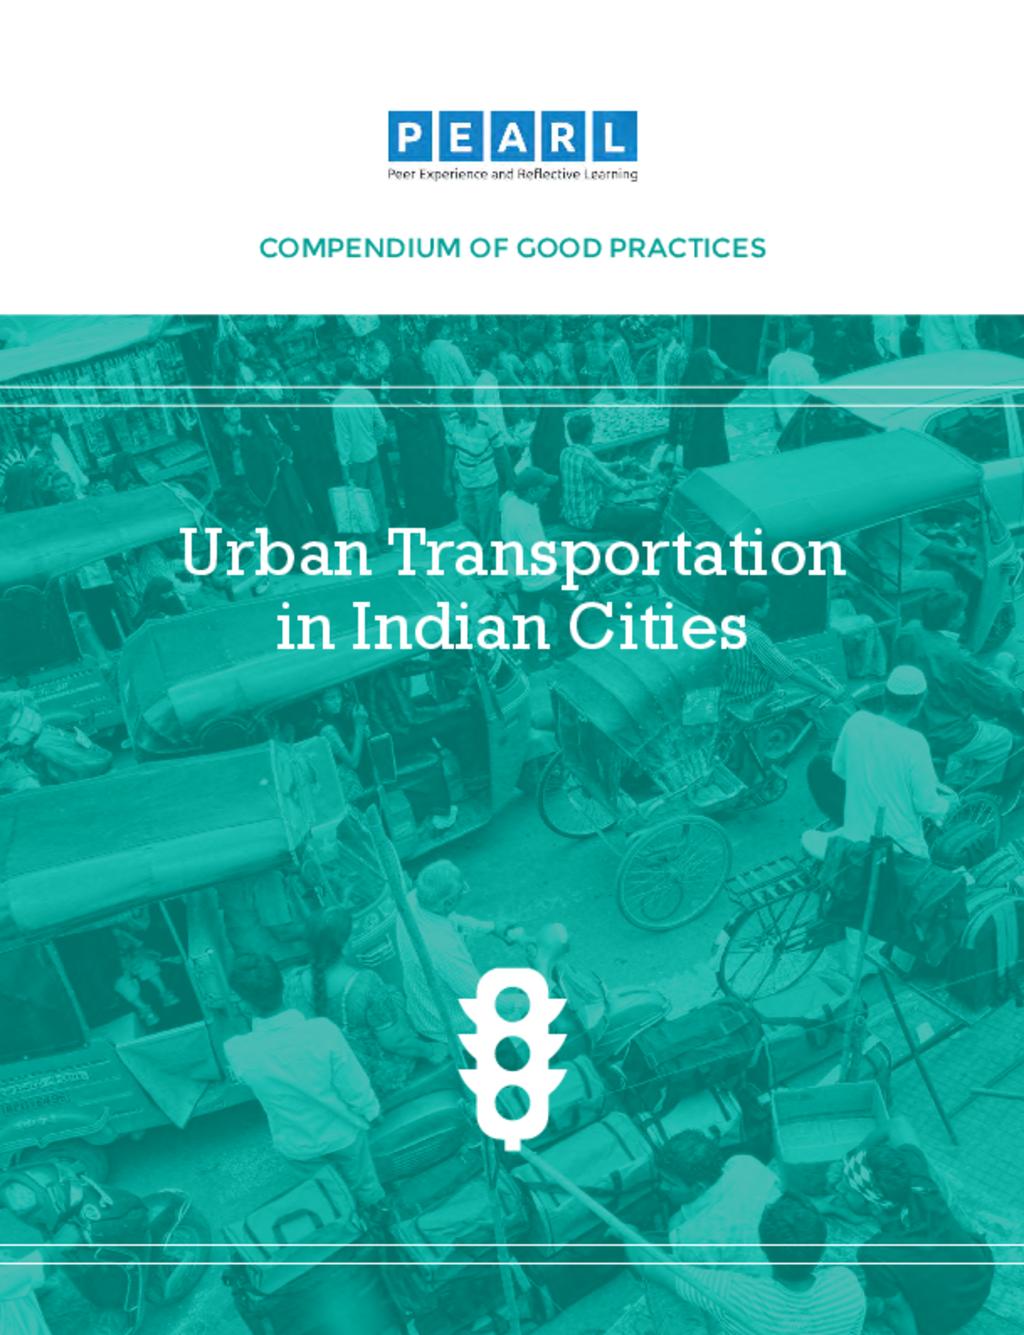 Good Practices in Urban Transport